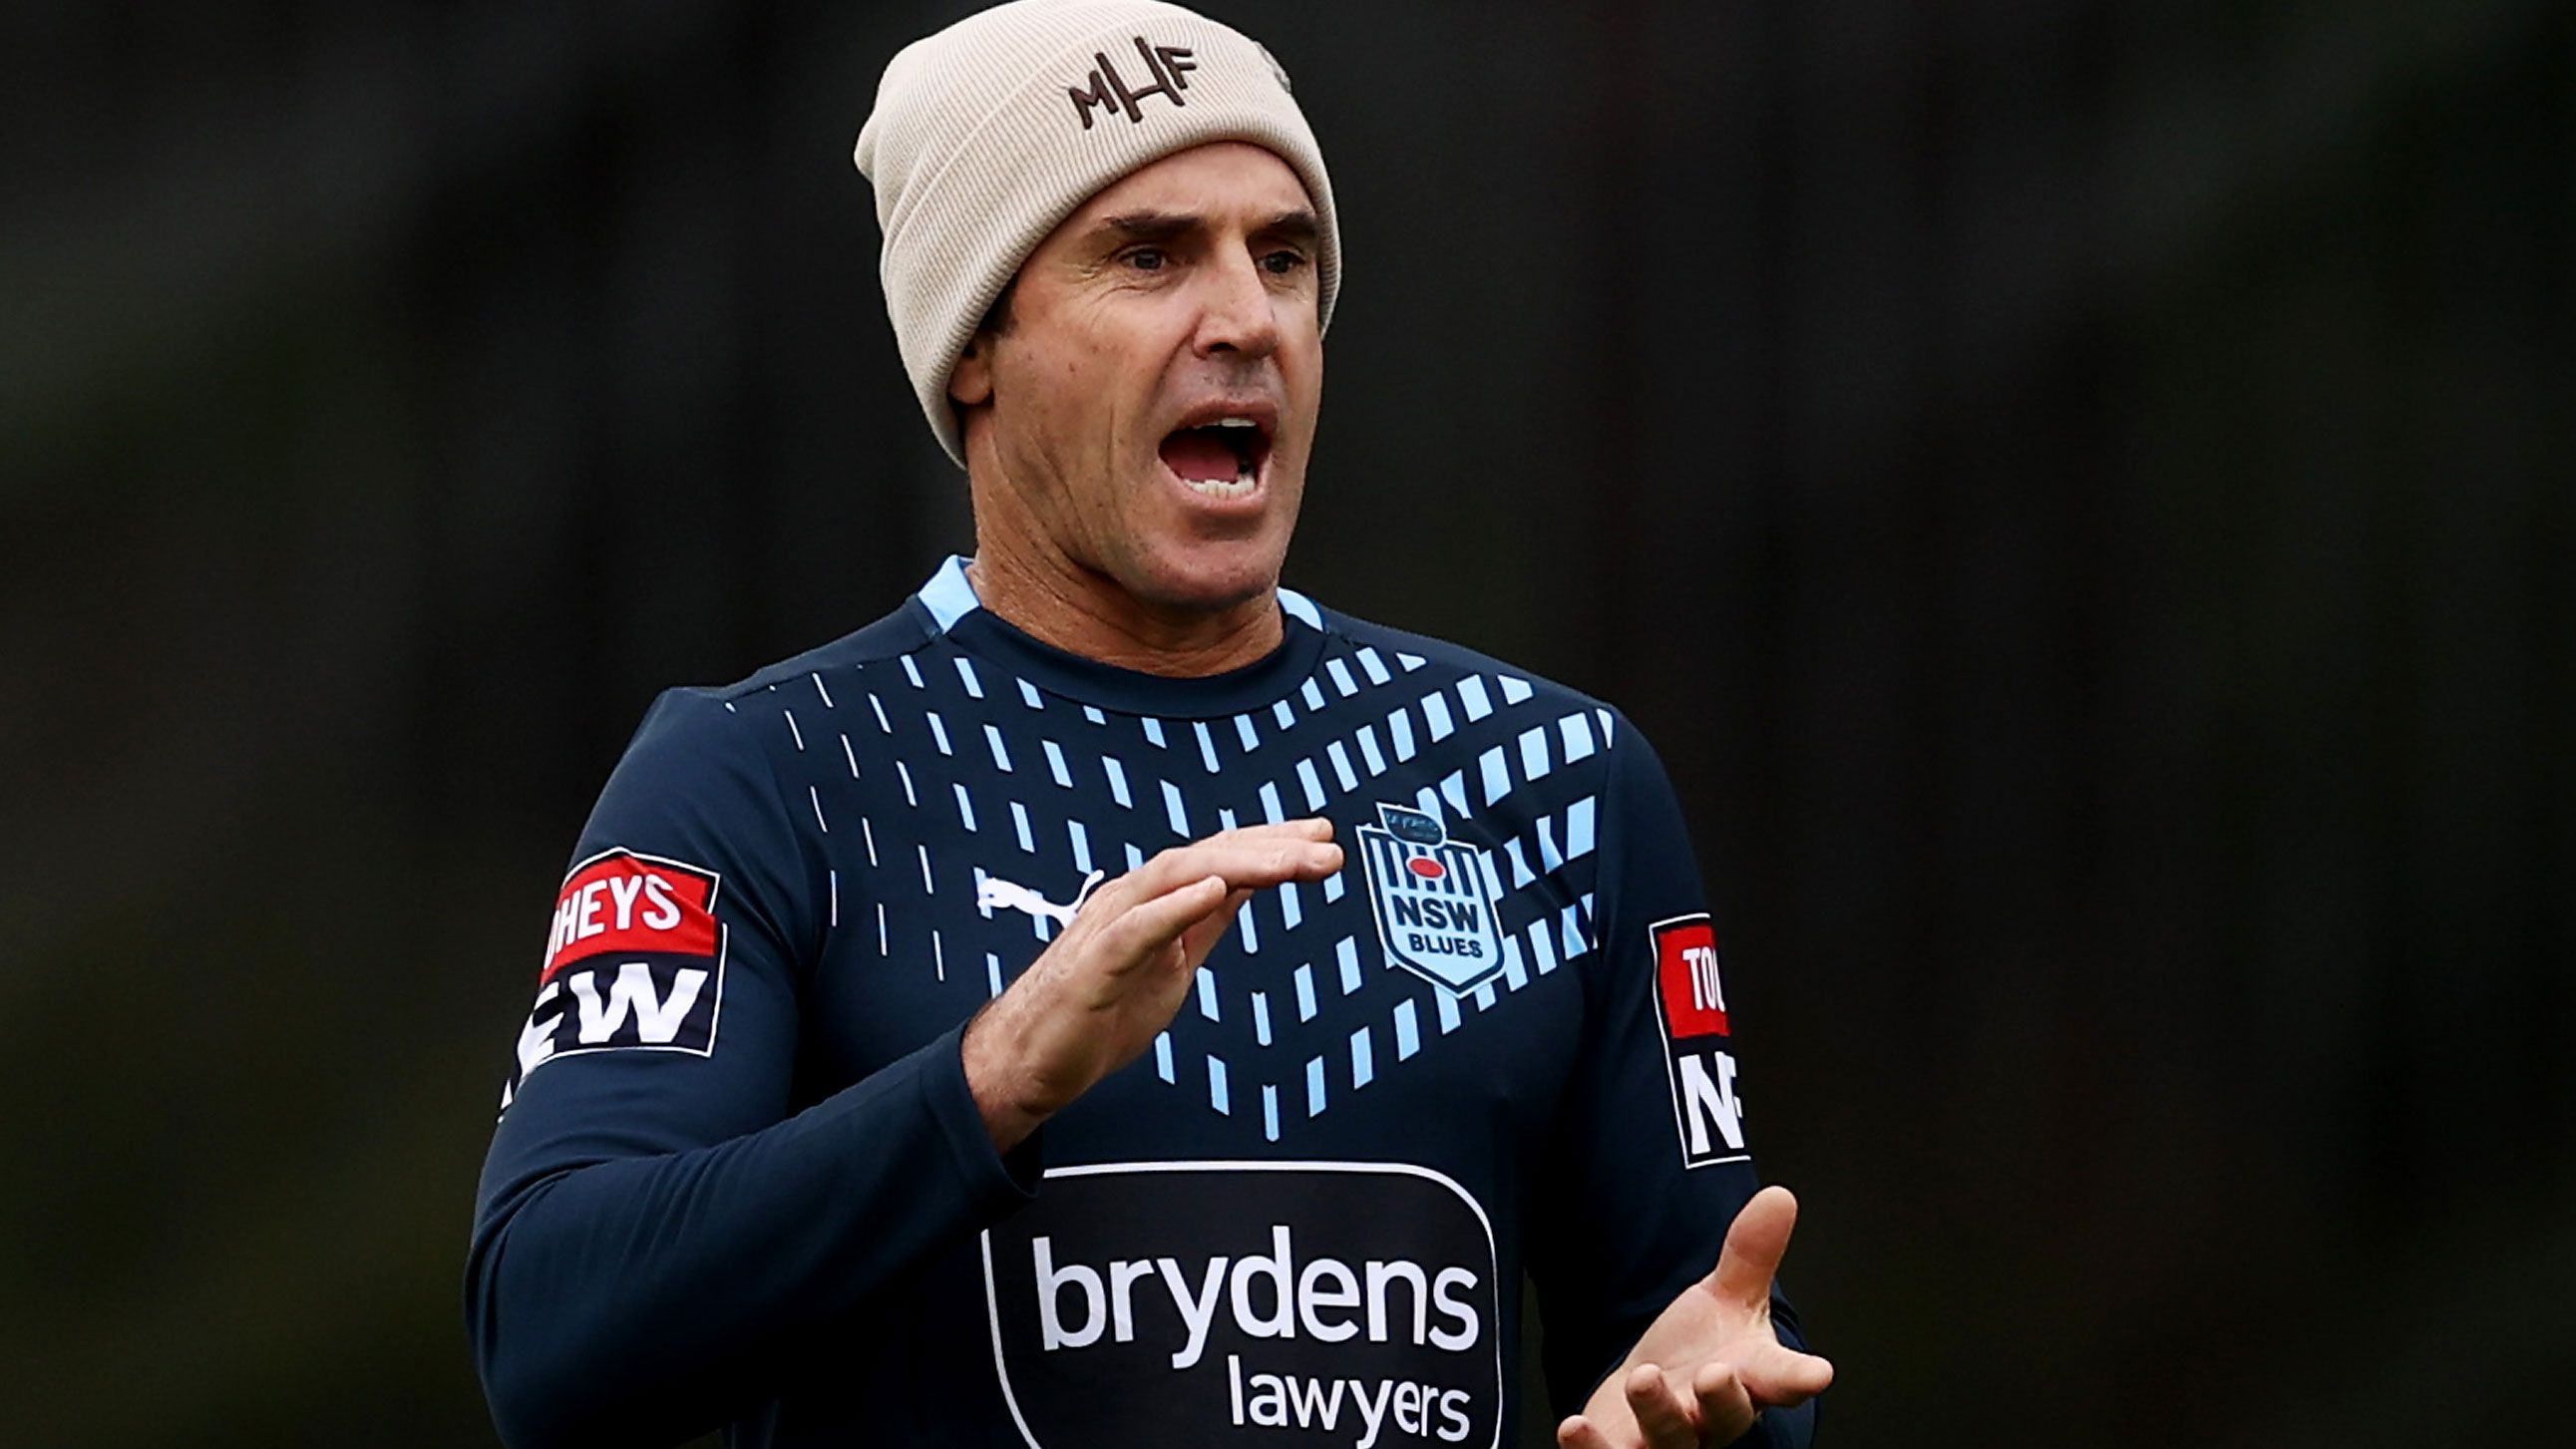 Brad Fittler's future as NSW Blues coach revealed, despite 2022 Origin series sitting on knife's edge